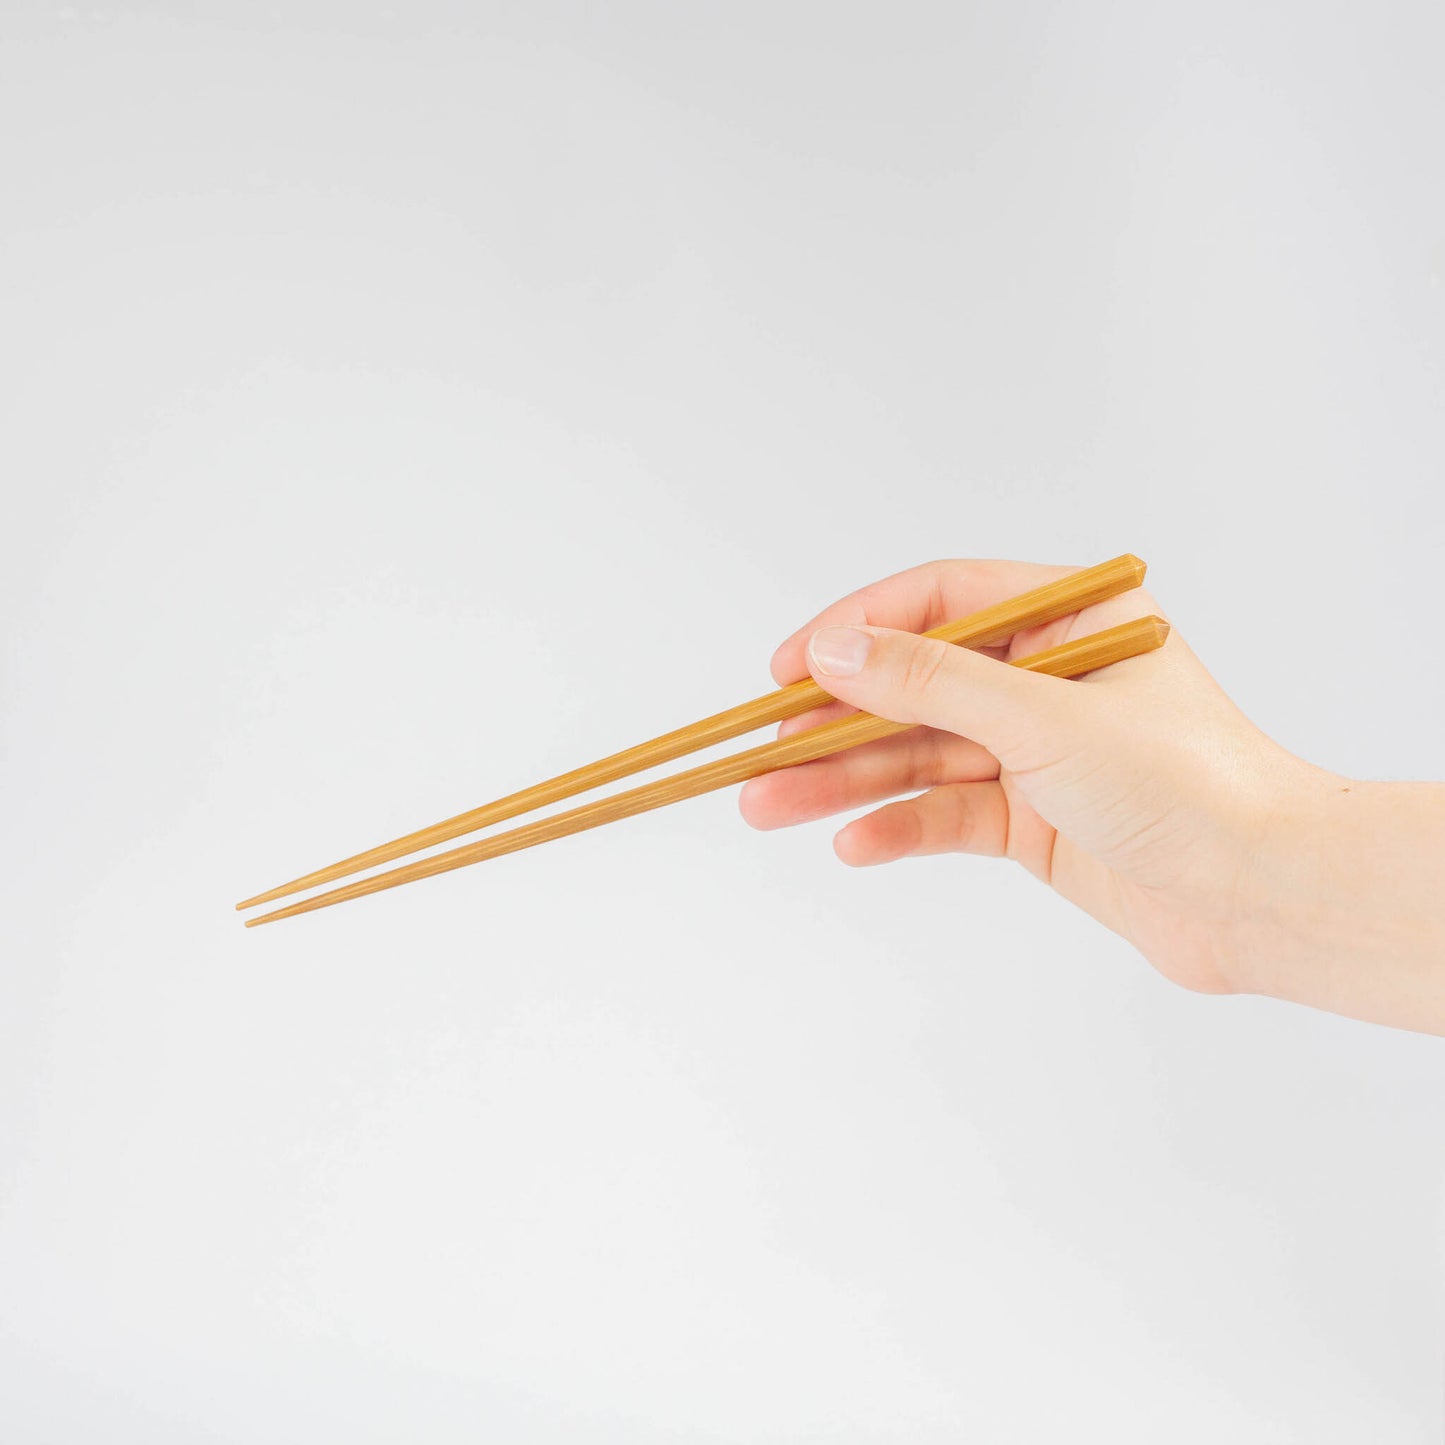 Palillos de bambú con corte de diamante 22,5 cm